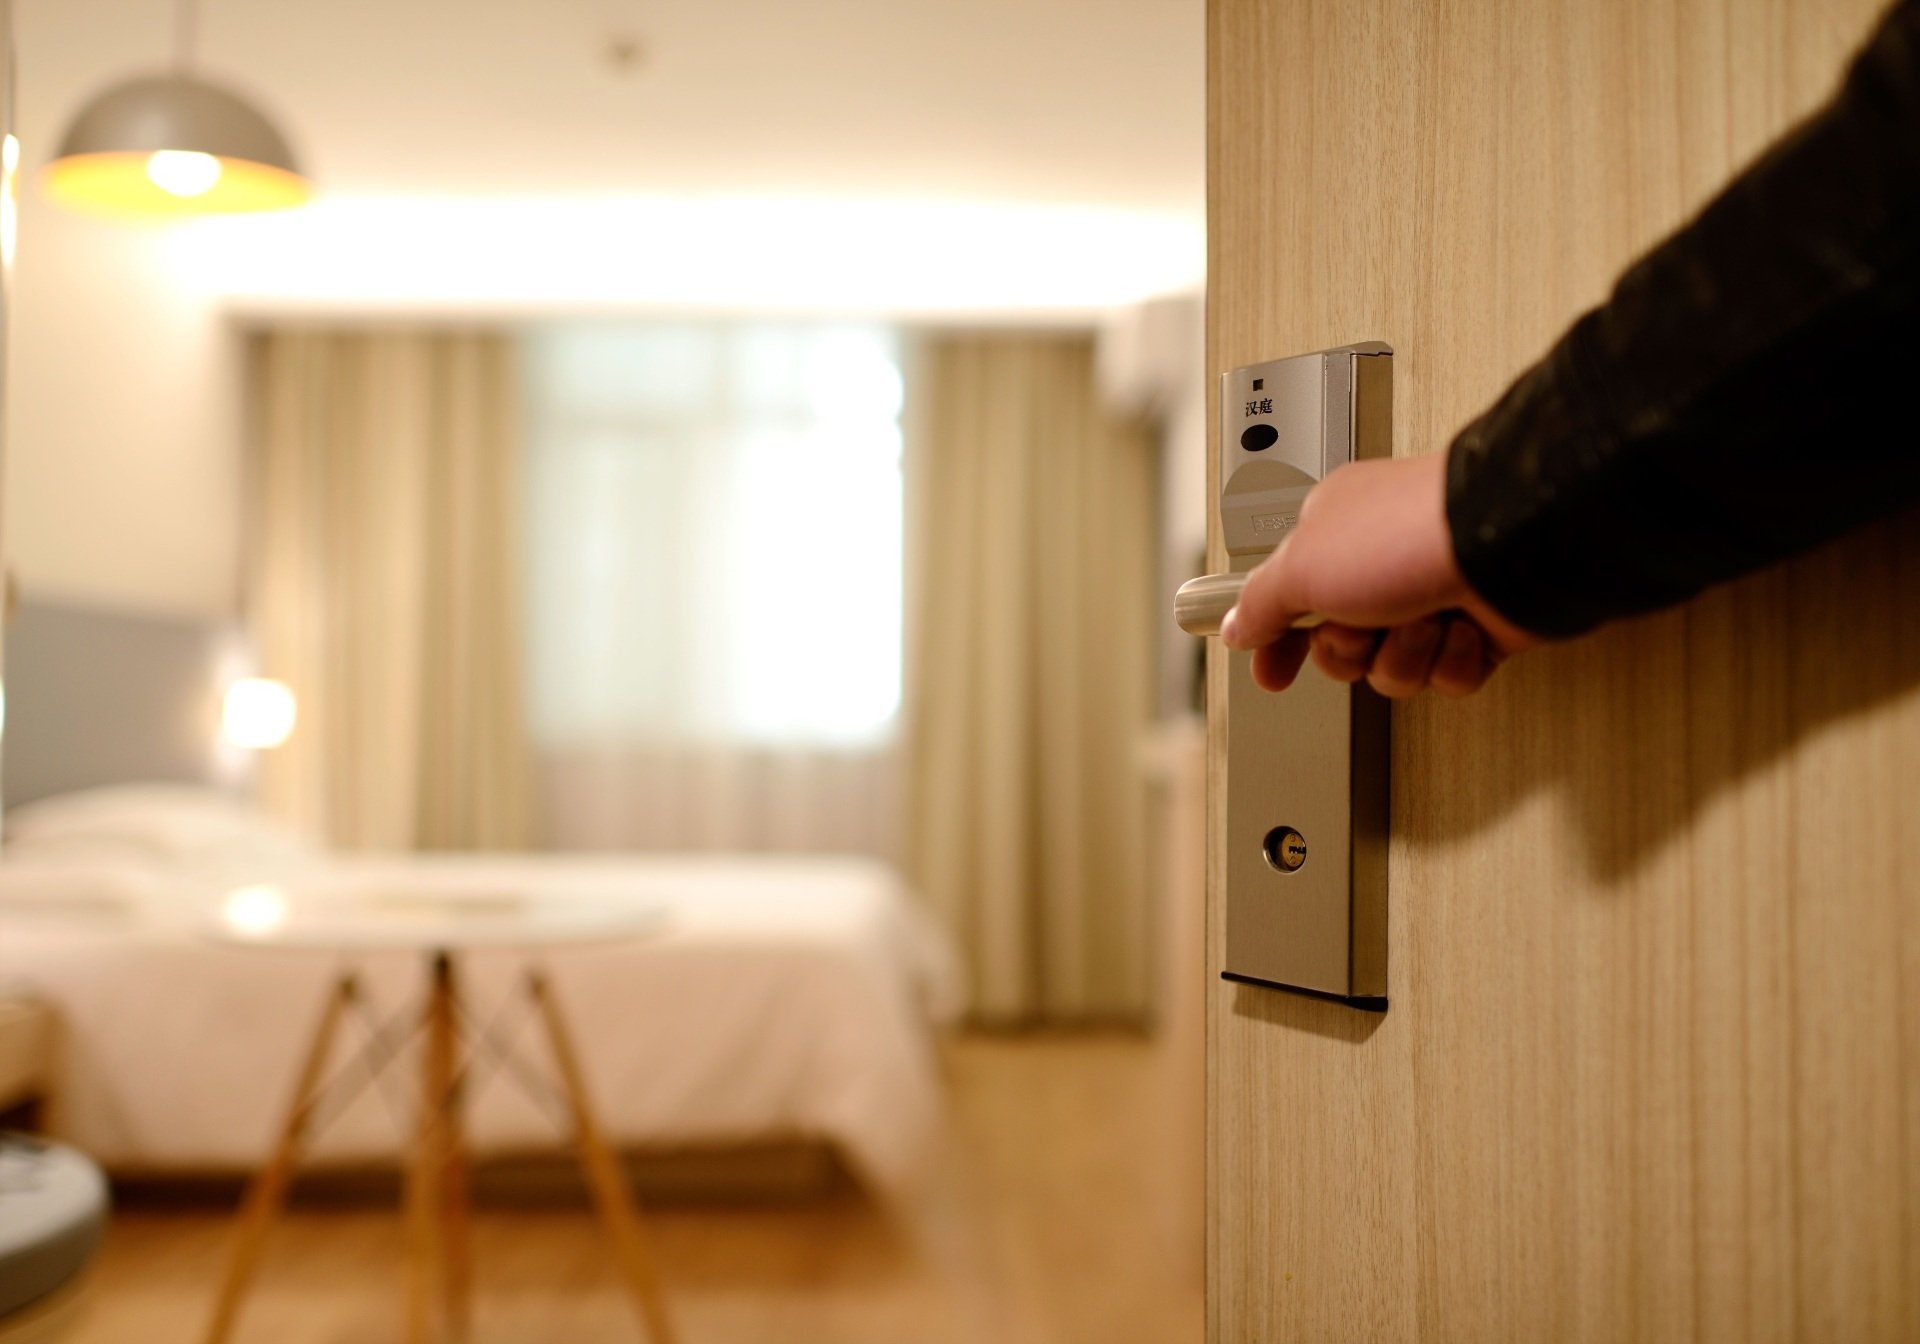 A hotel room view through an open door